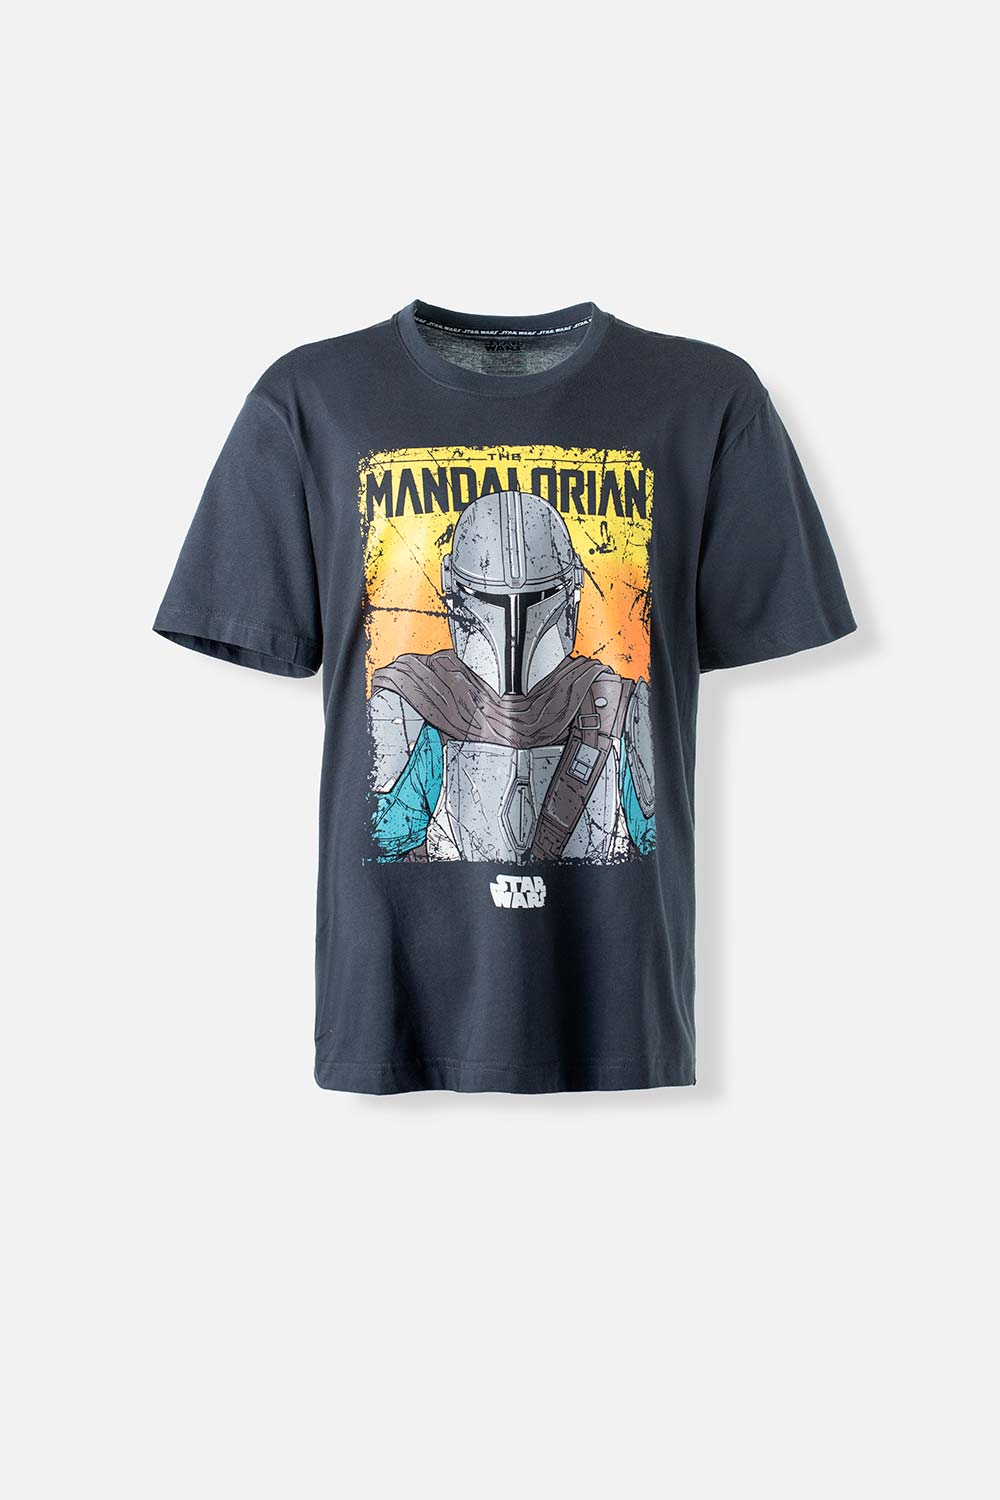 Camiseta de Mandalorian manga corta gris para hombre L-0